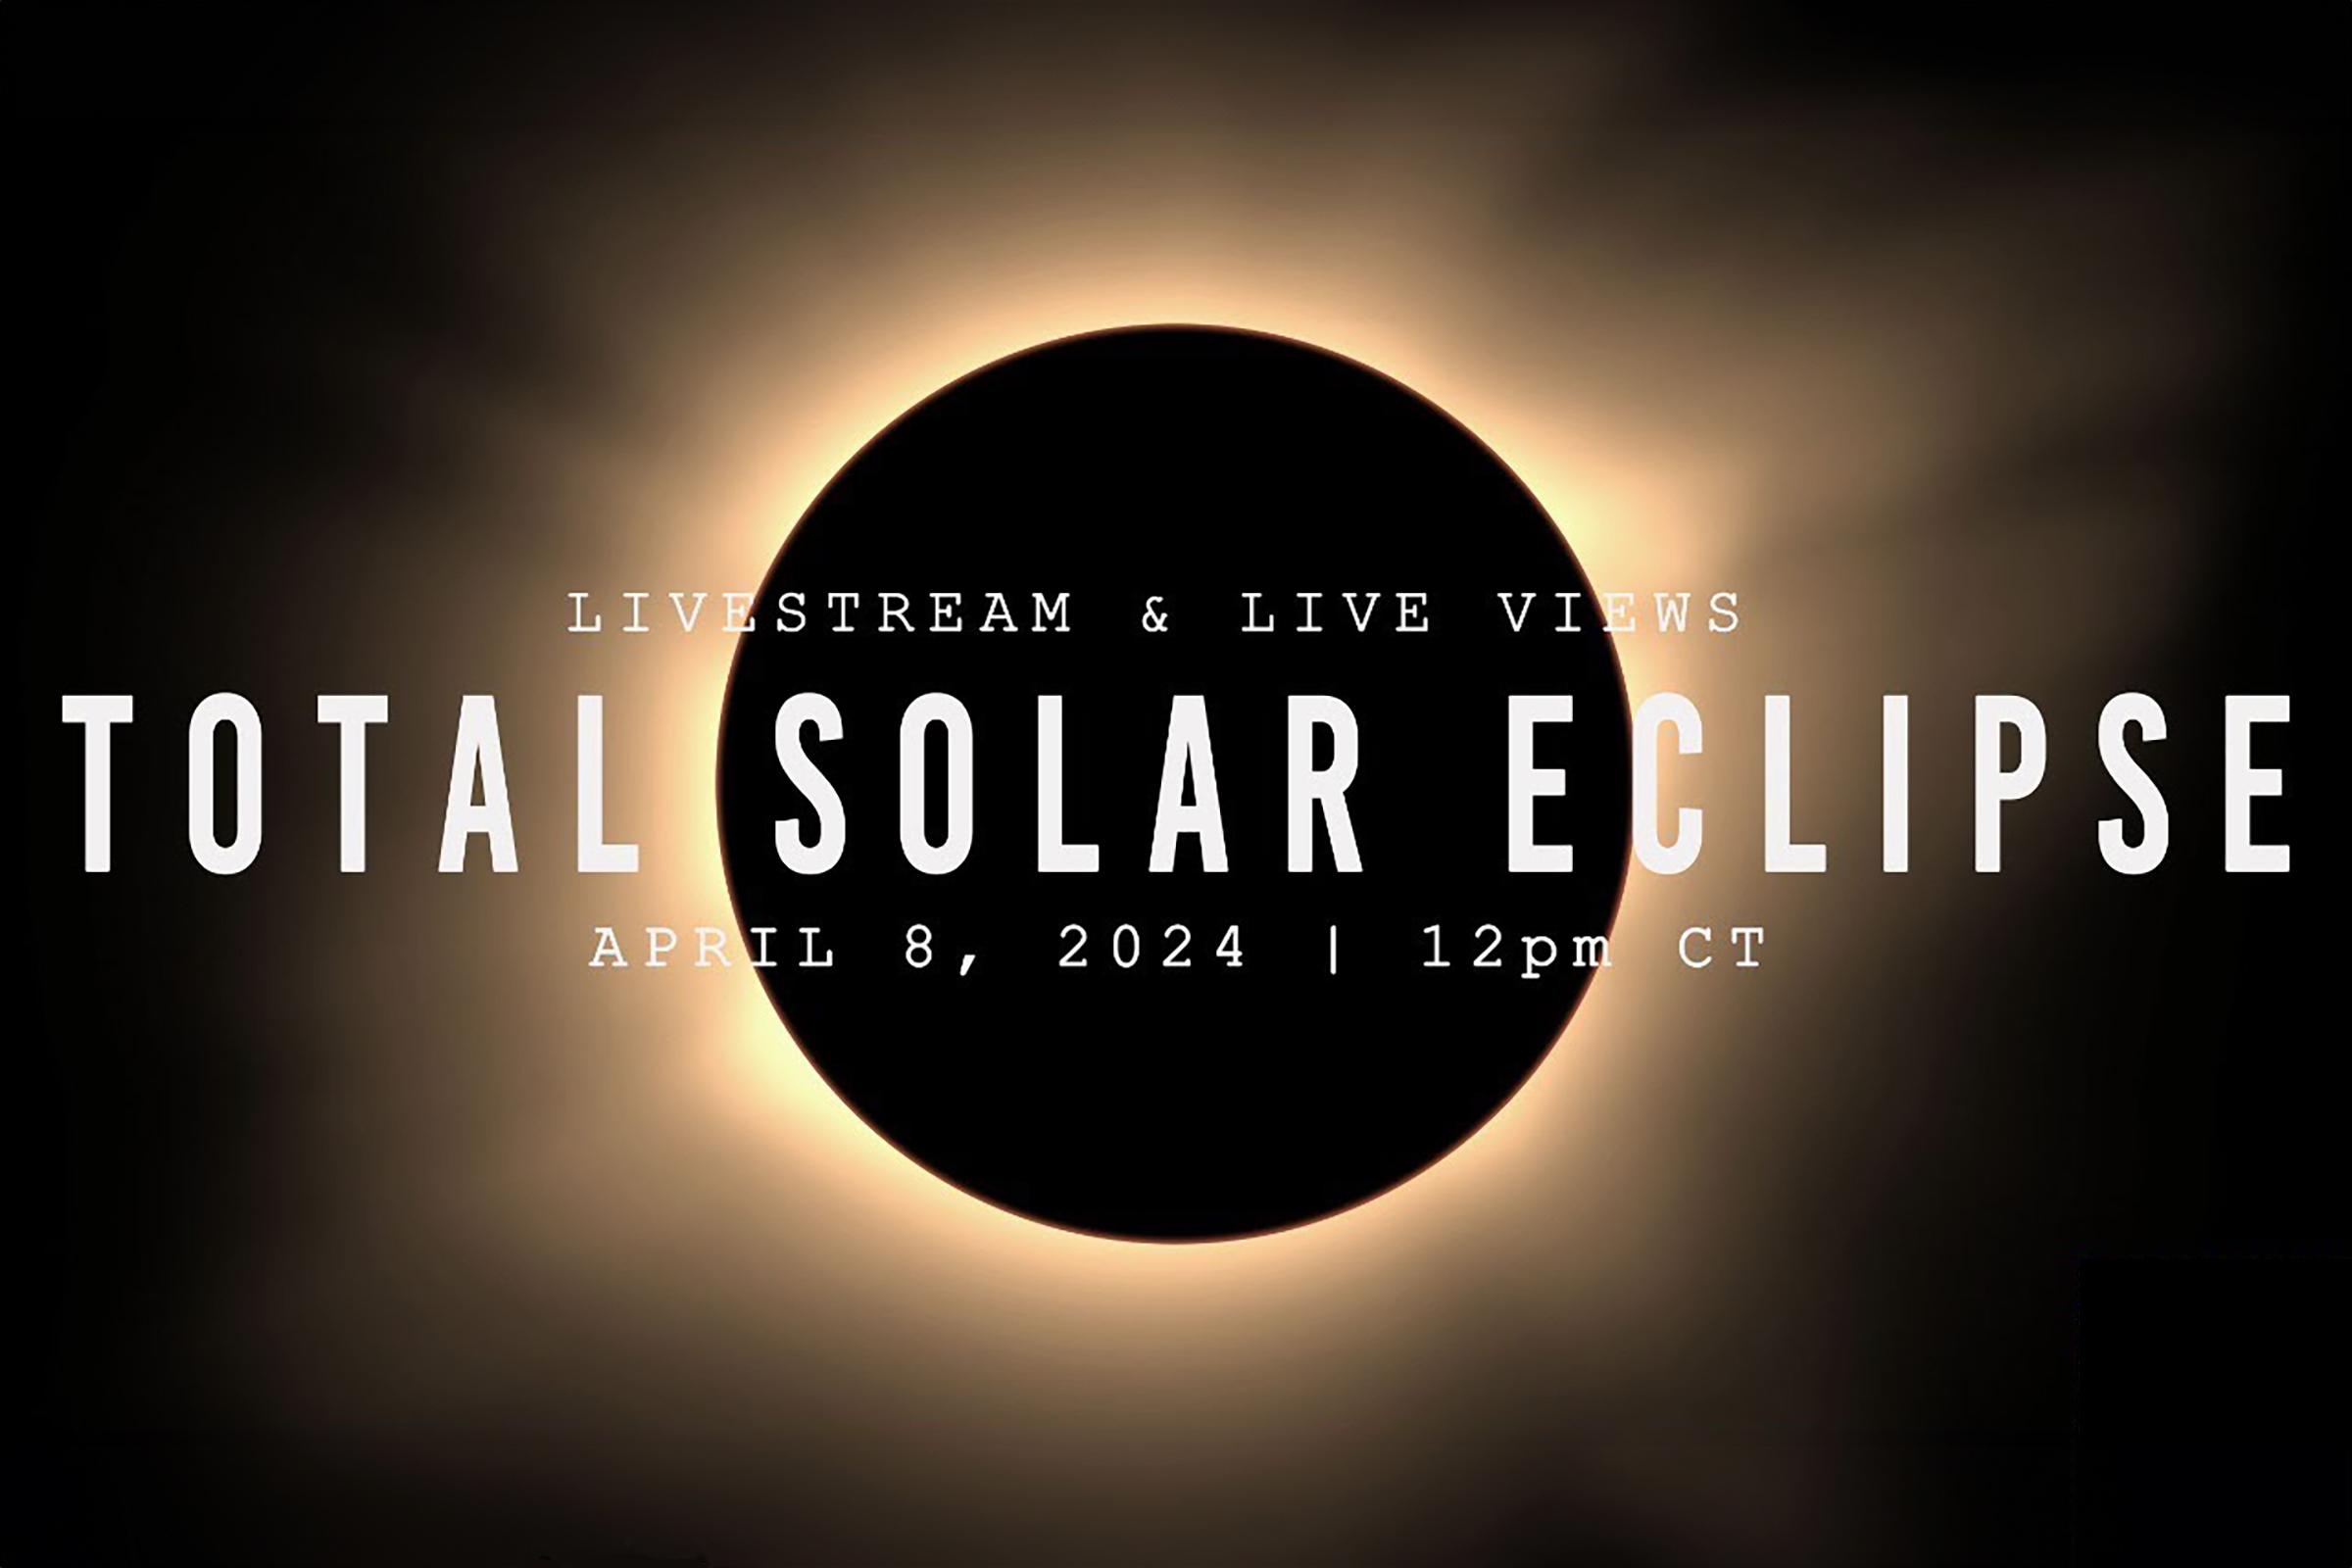 Livestream and liveviews | Total Solar Eclipse April 8, 2024, 12pm CT